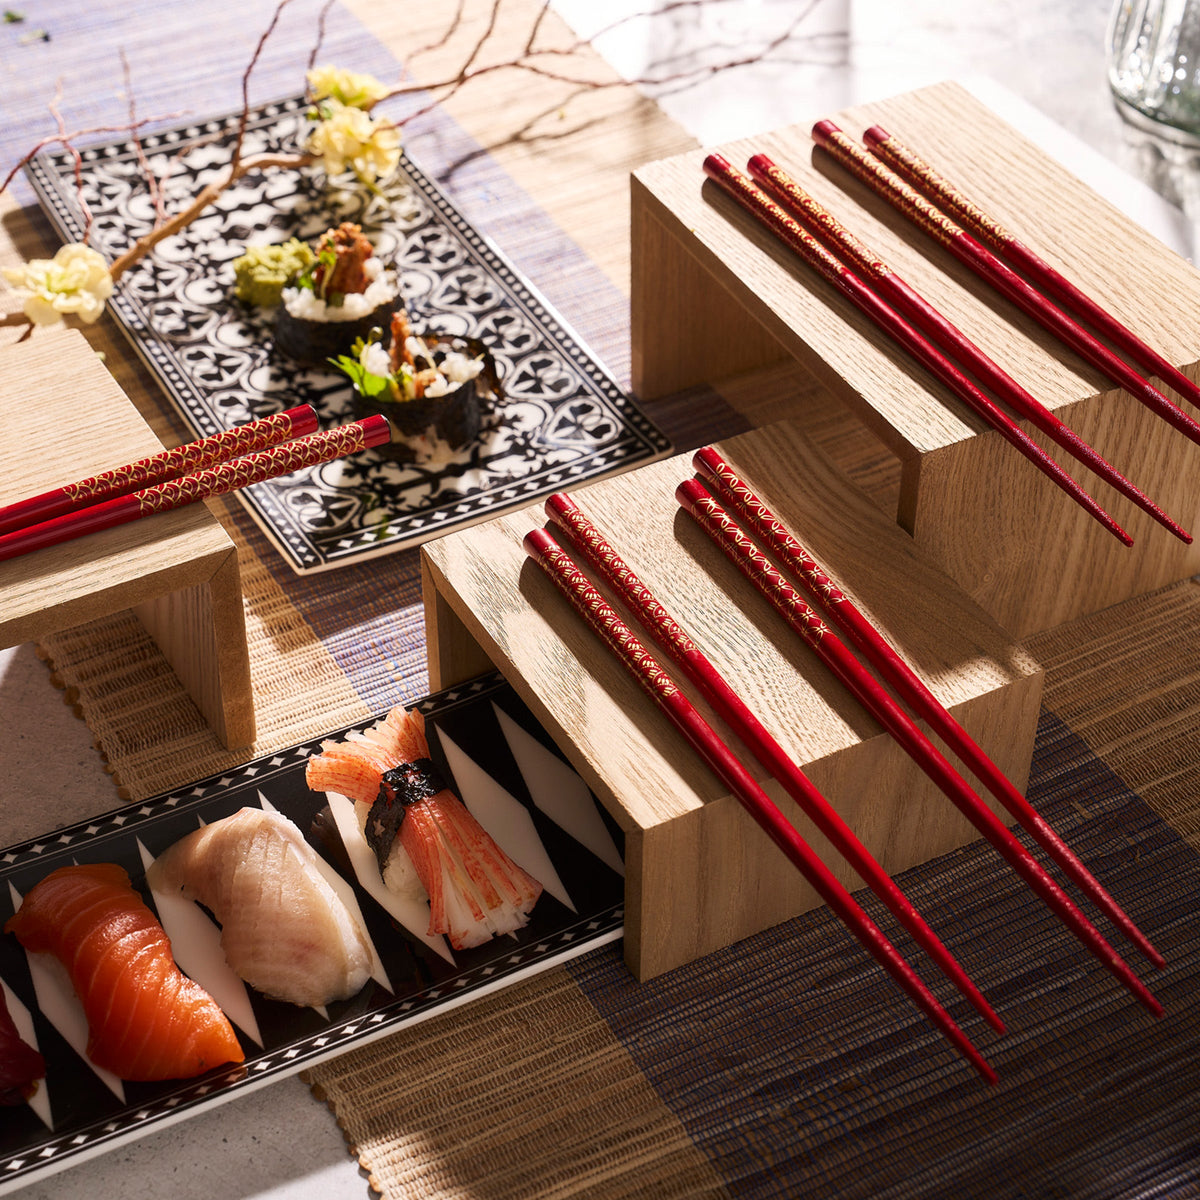 Tokyo Chopsticks by Miya, Inc. and sushi on a wooden tray.